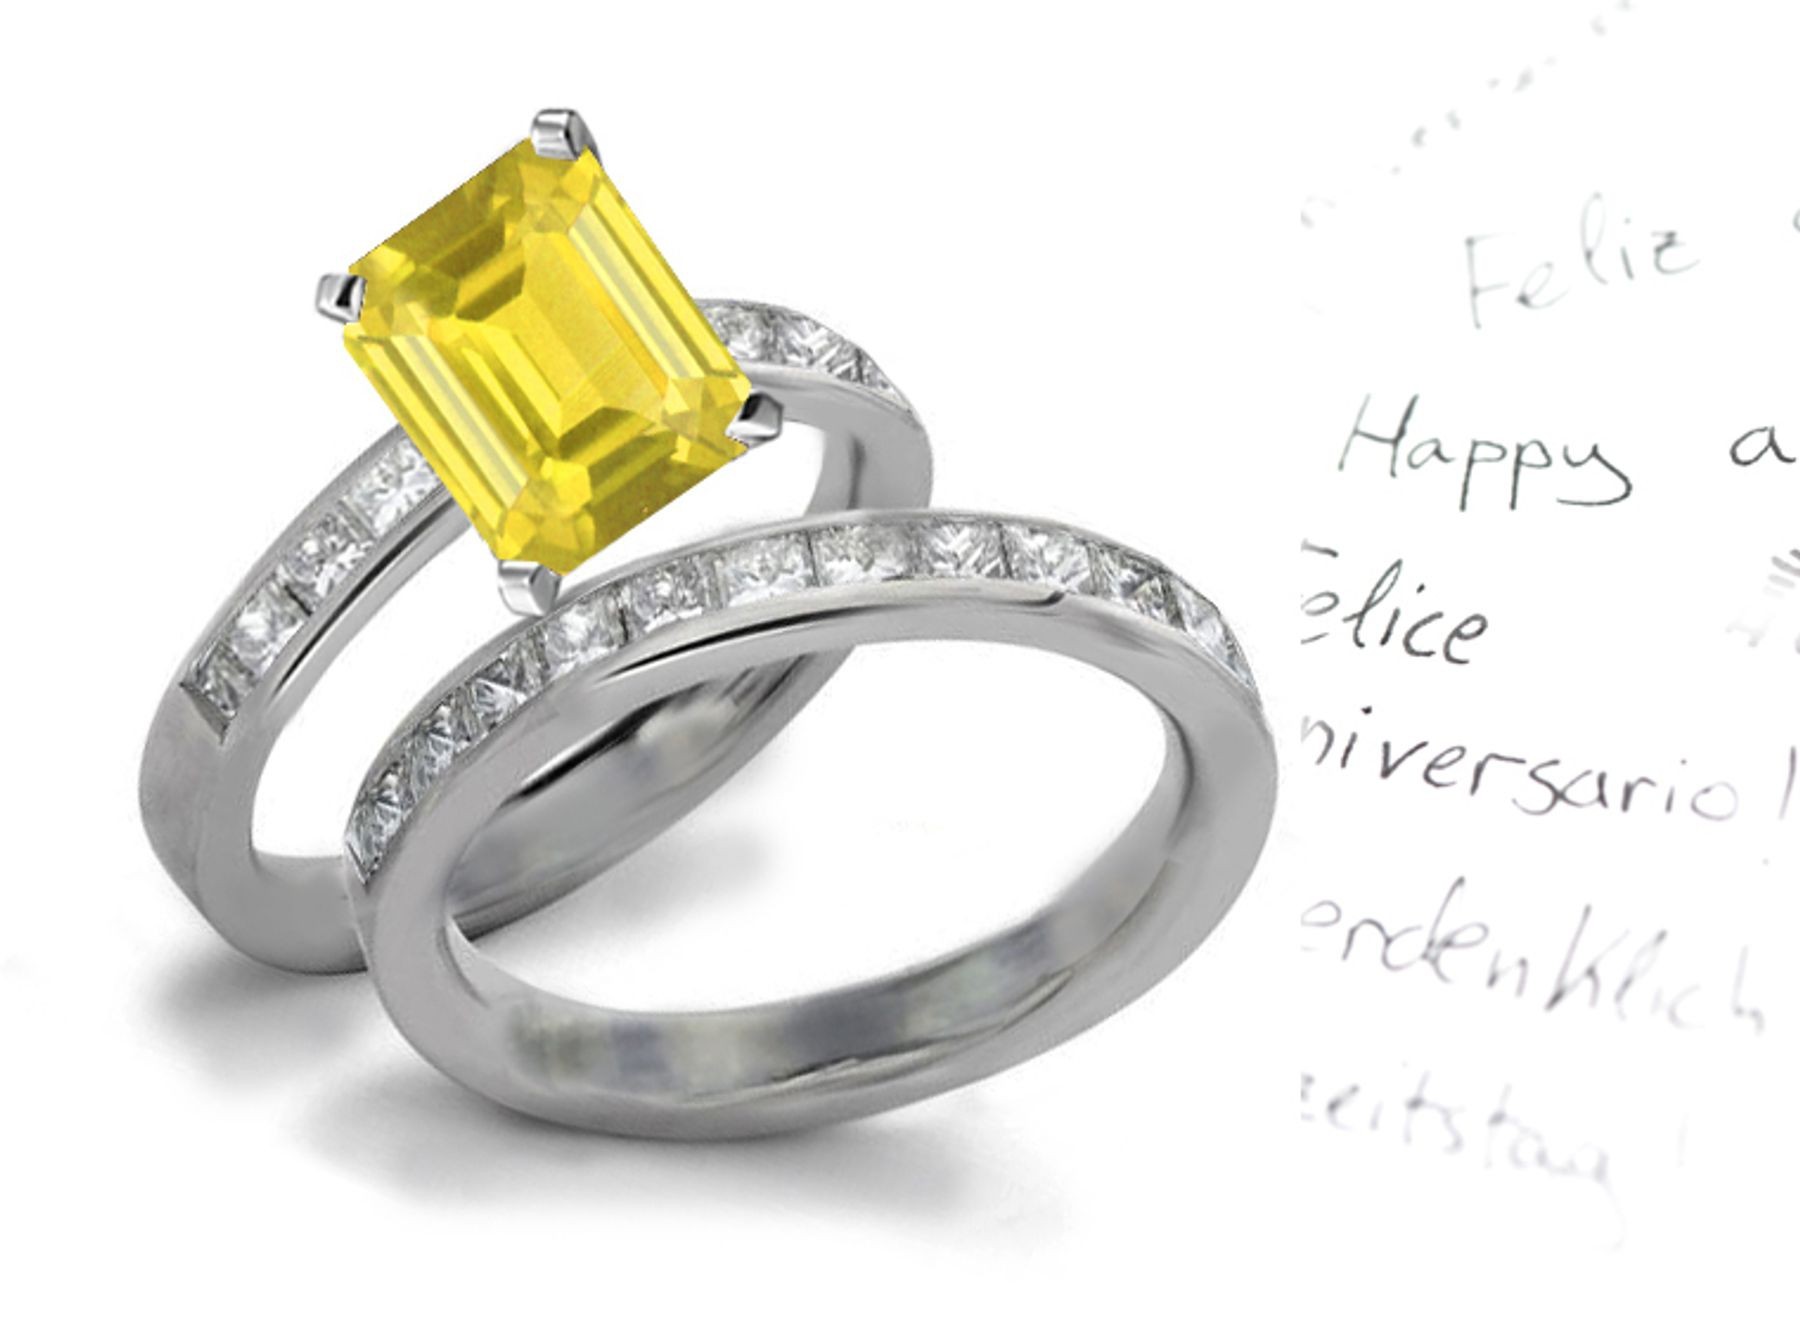 Stunning Jewels: Yellow Sapphire & Diamond Engagement & Wedding Rings in New Styles